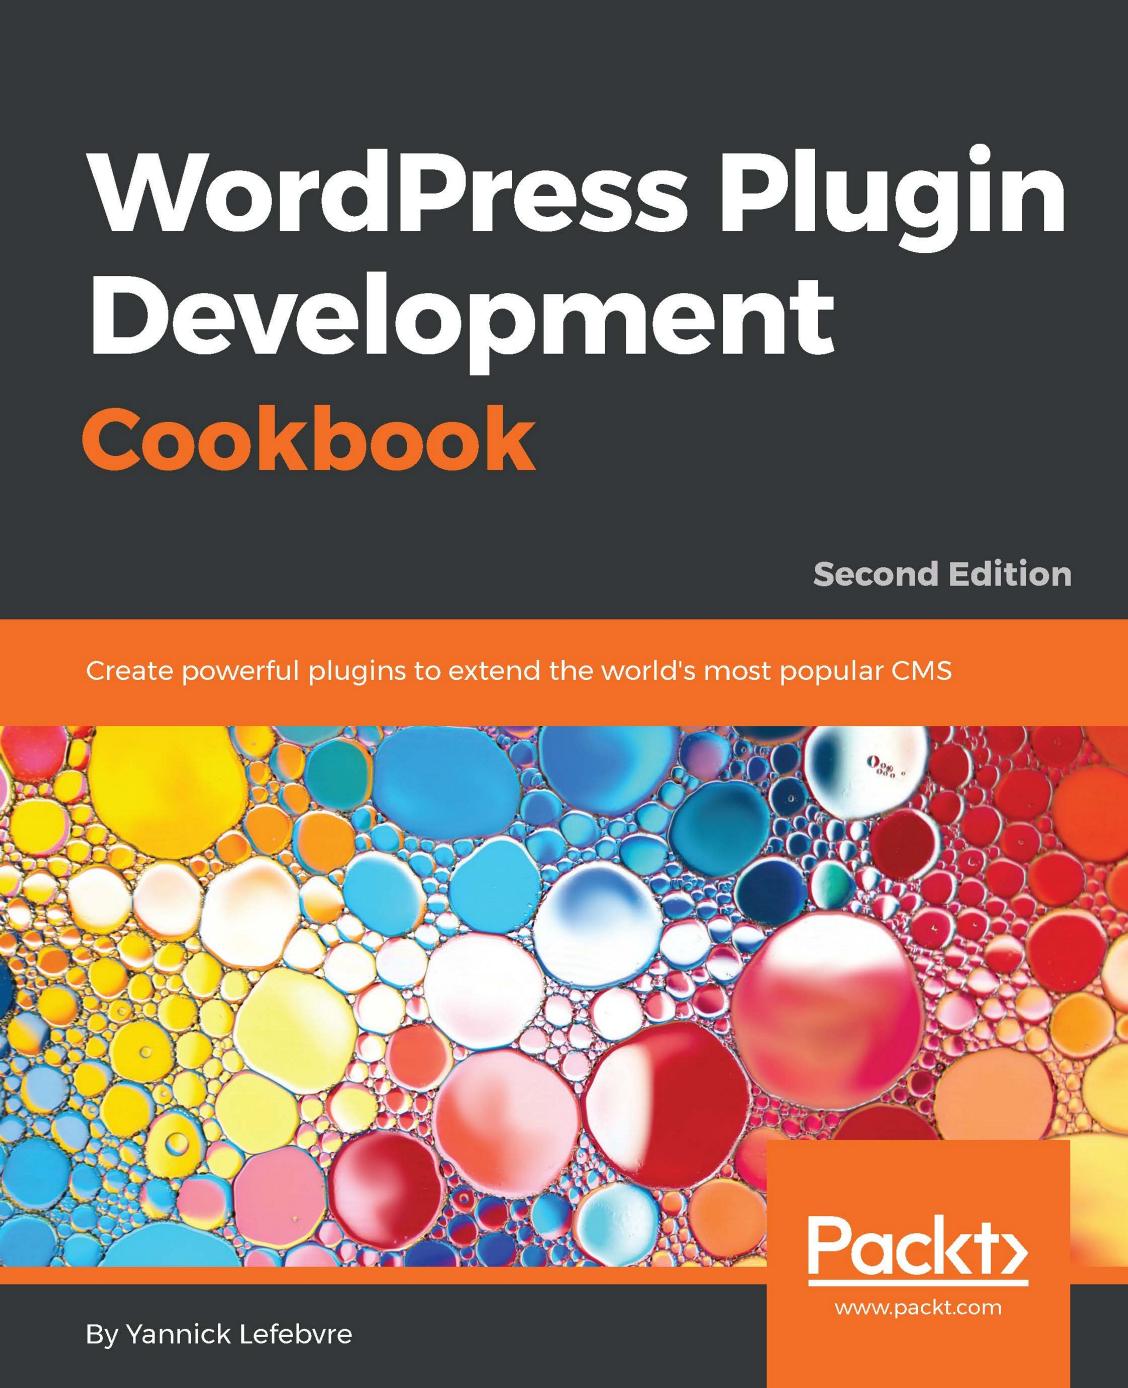 WordPress Plugin Development Cookbook by Yannick Lefebvre